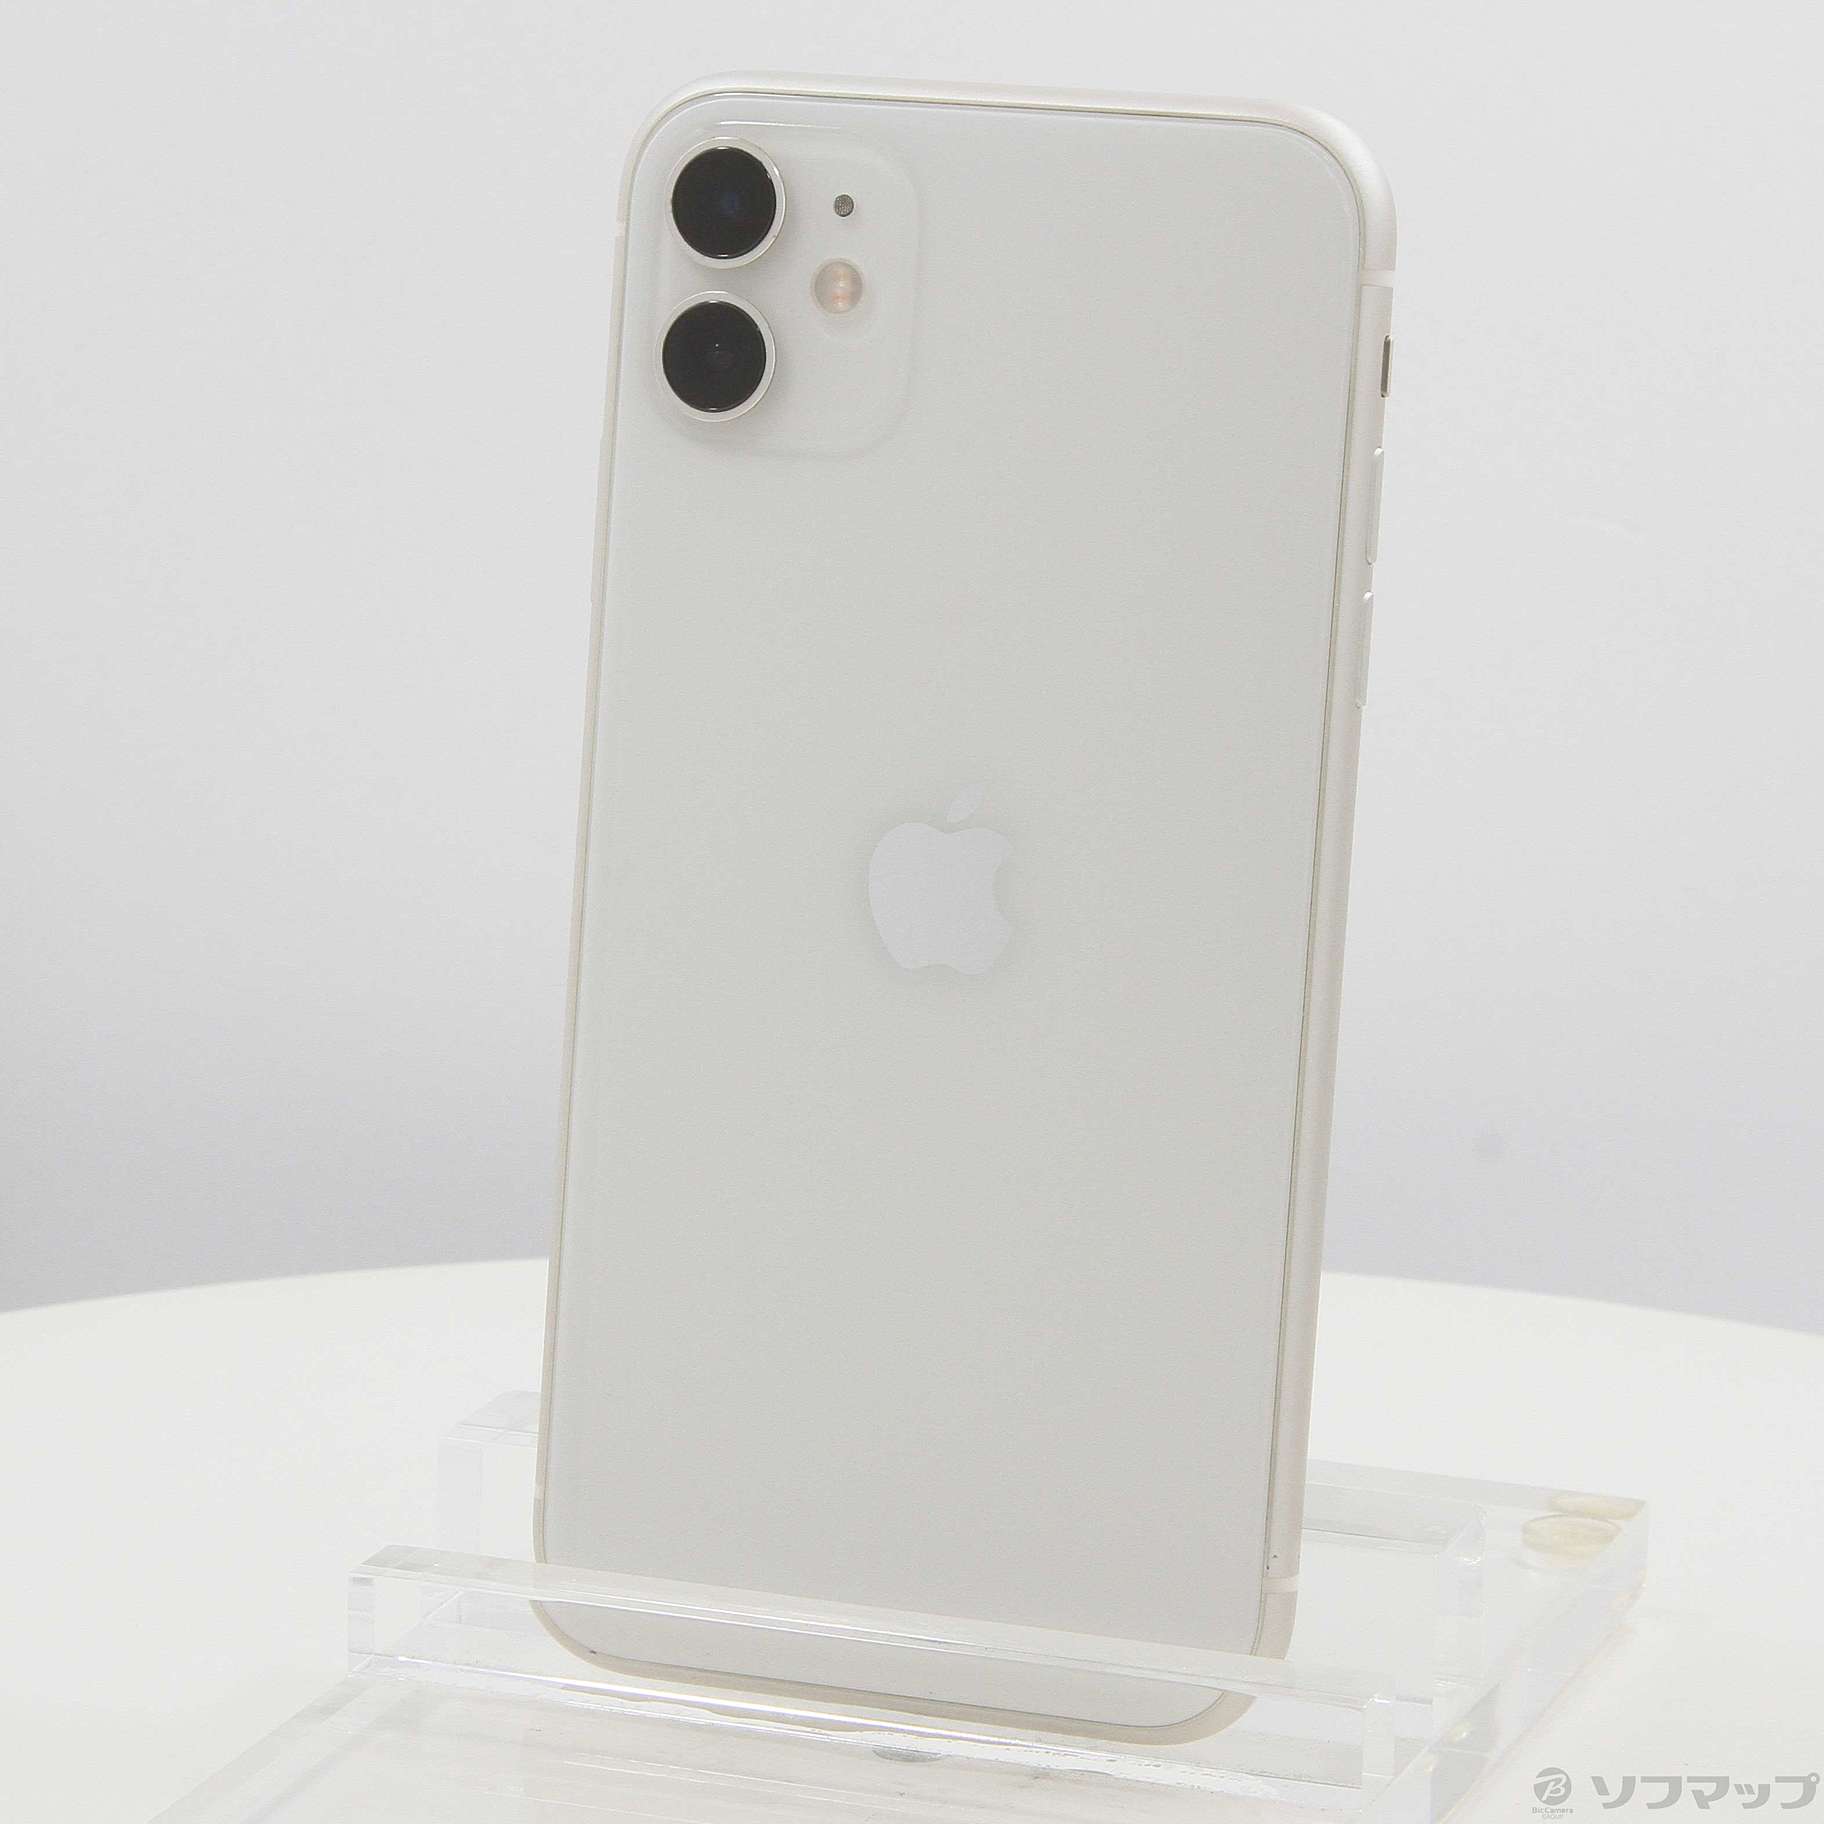 iPhone11 128GB White